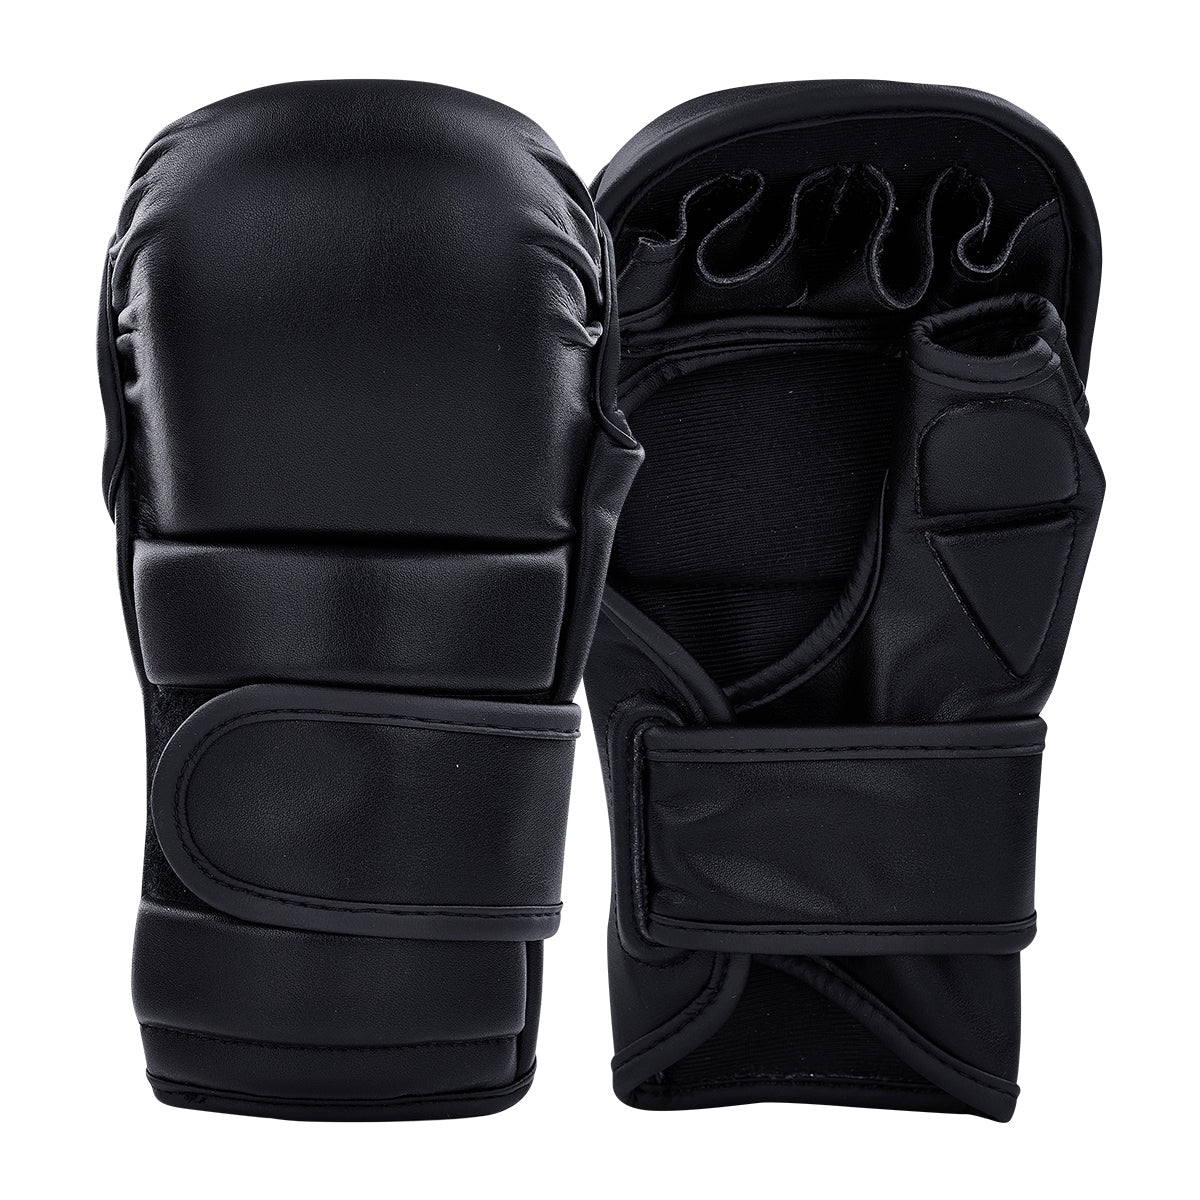 Century Solid Leather MMA Training Glove Black